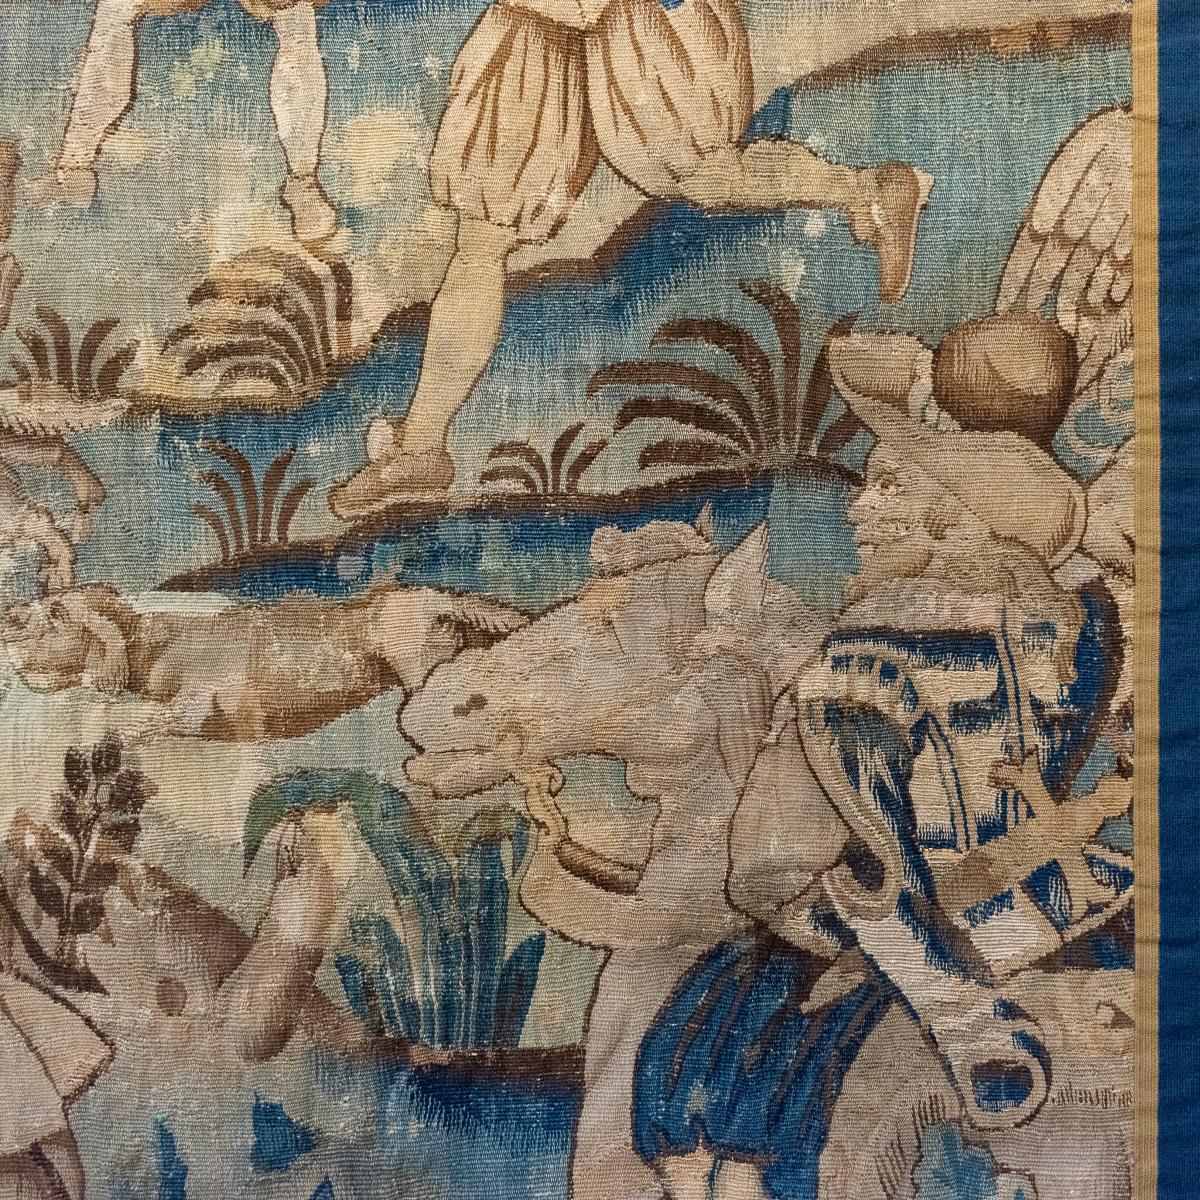 A 17th century tapestry panel, Flemish, circa 1600-20